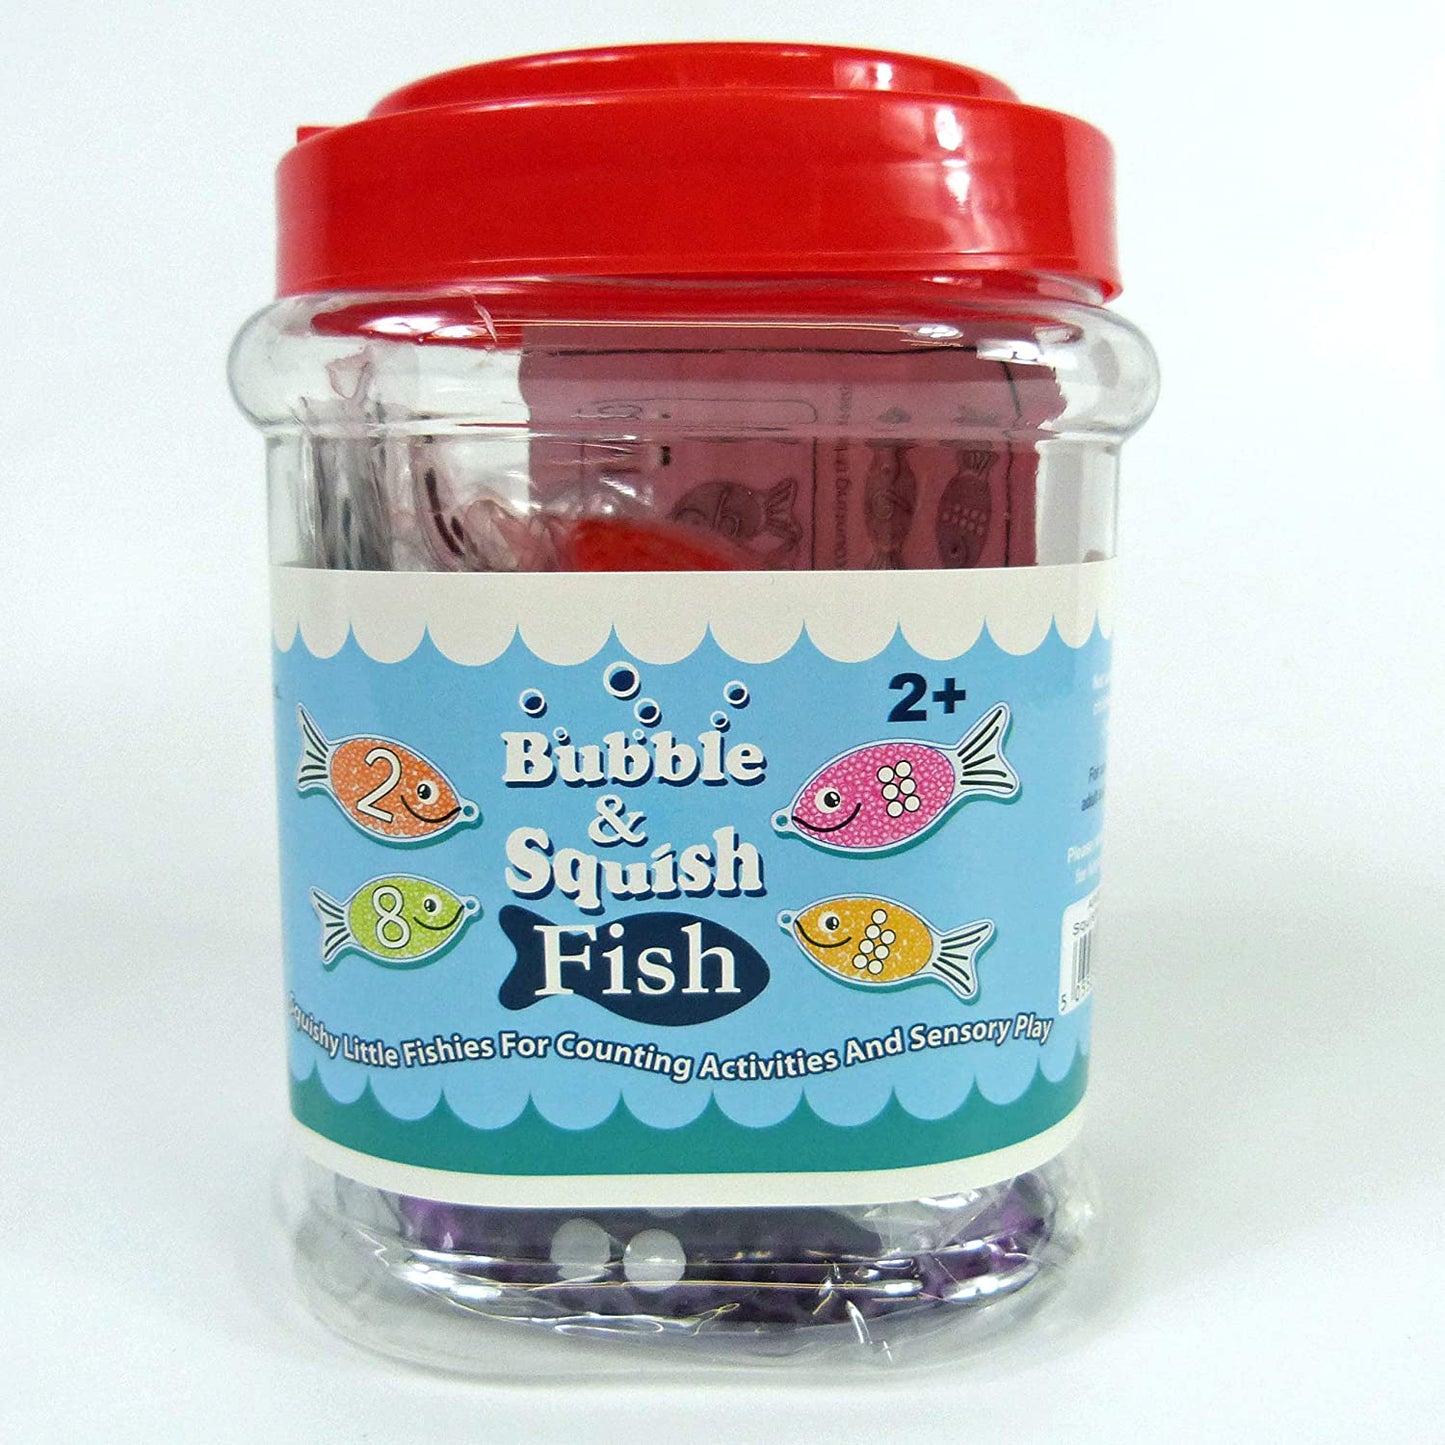 Bubble & Squish Fish